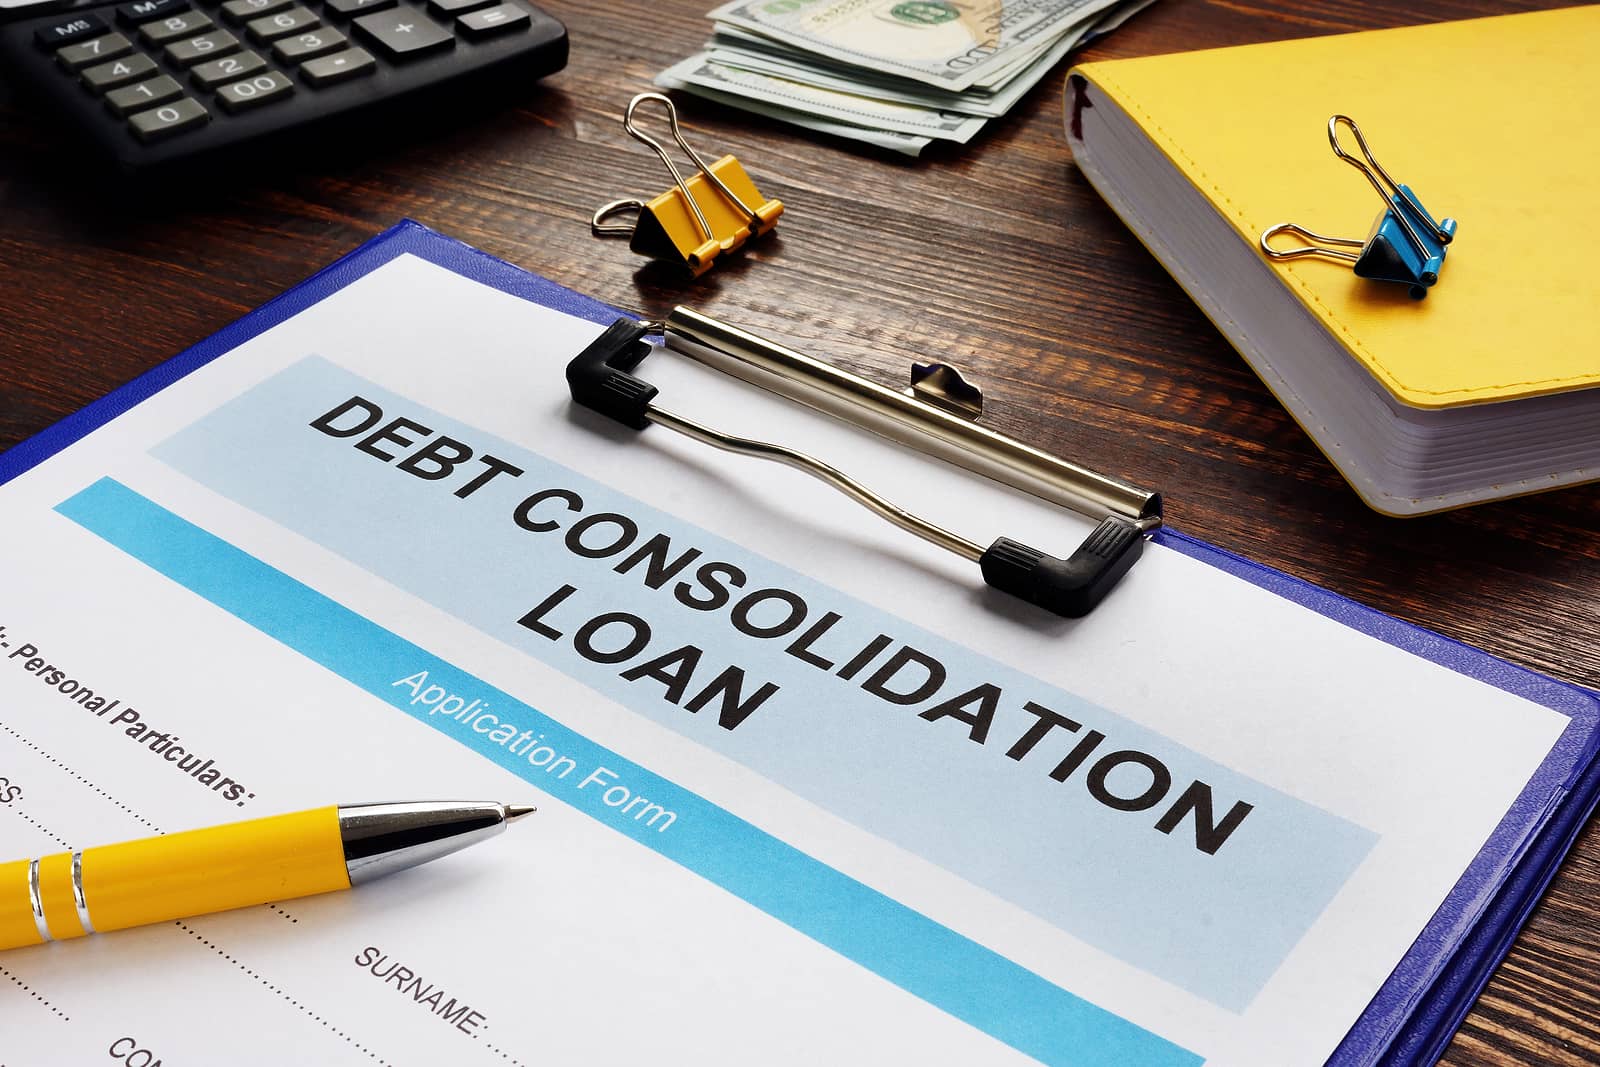 Debt Consolidation Loans in Ontario